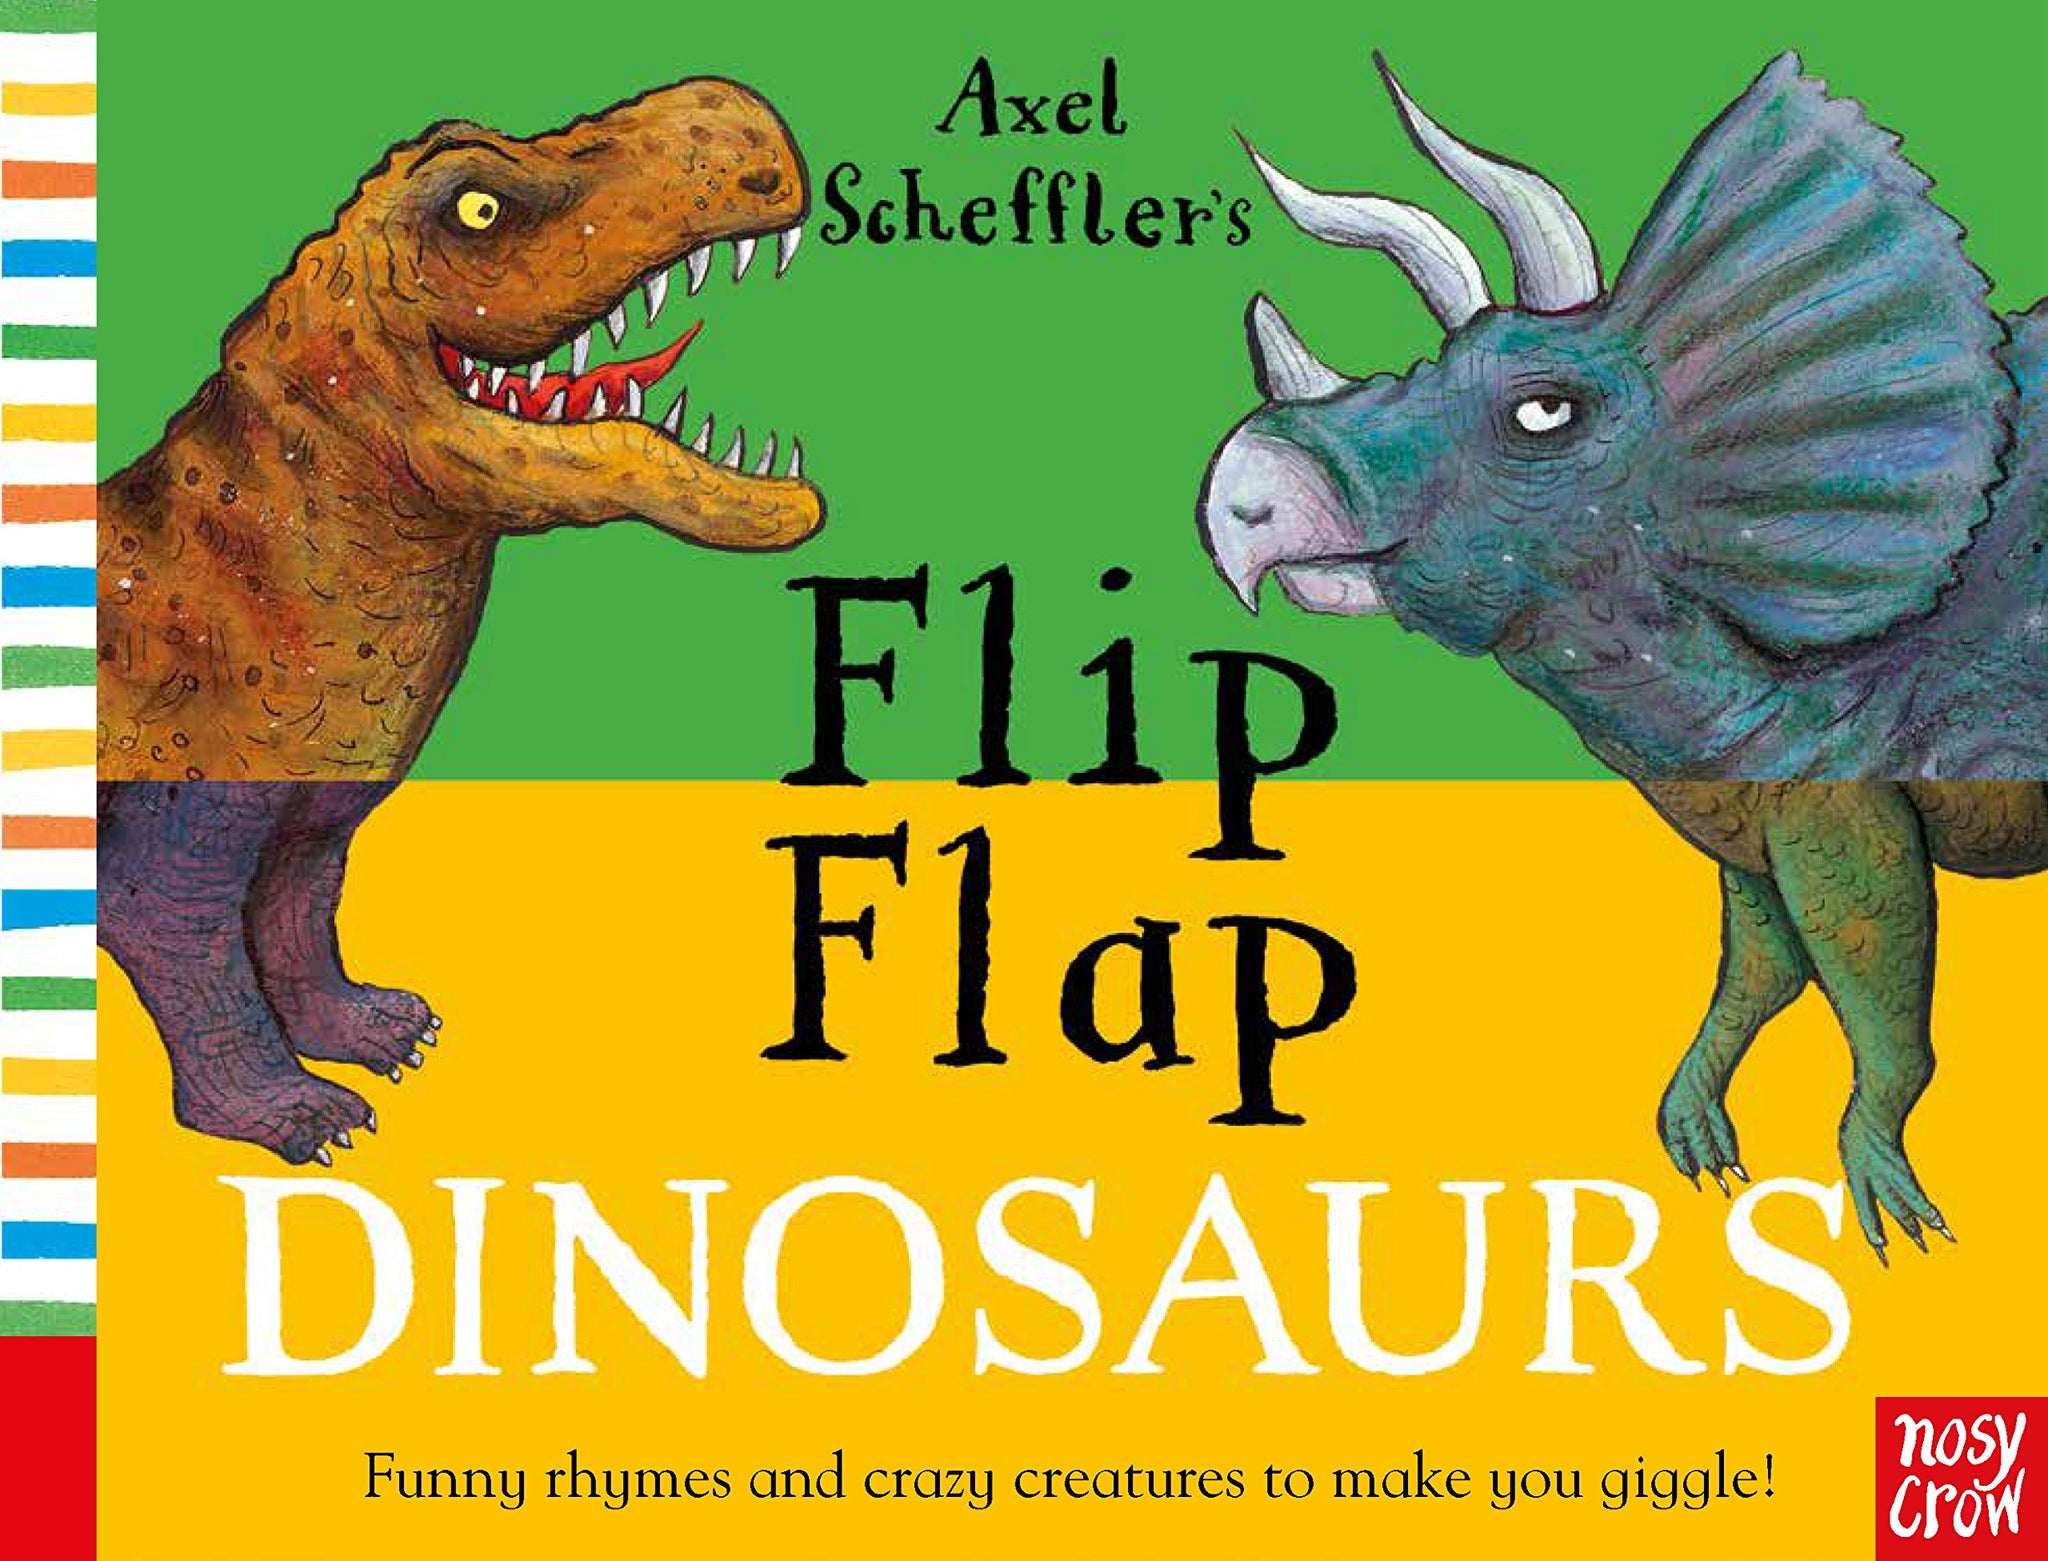 Flip Flap Dinosaurs